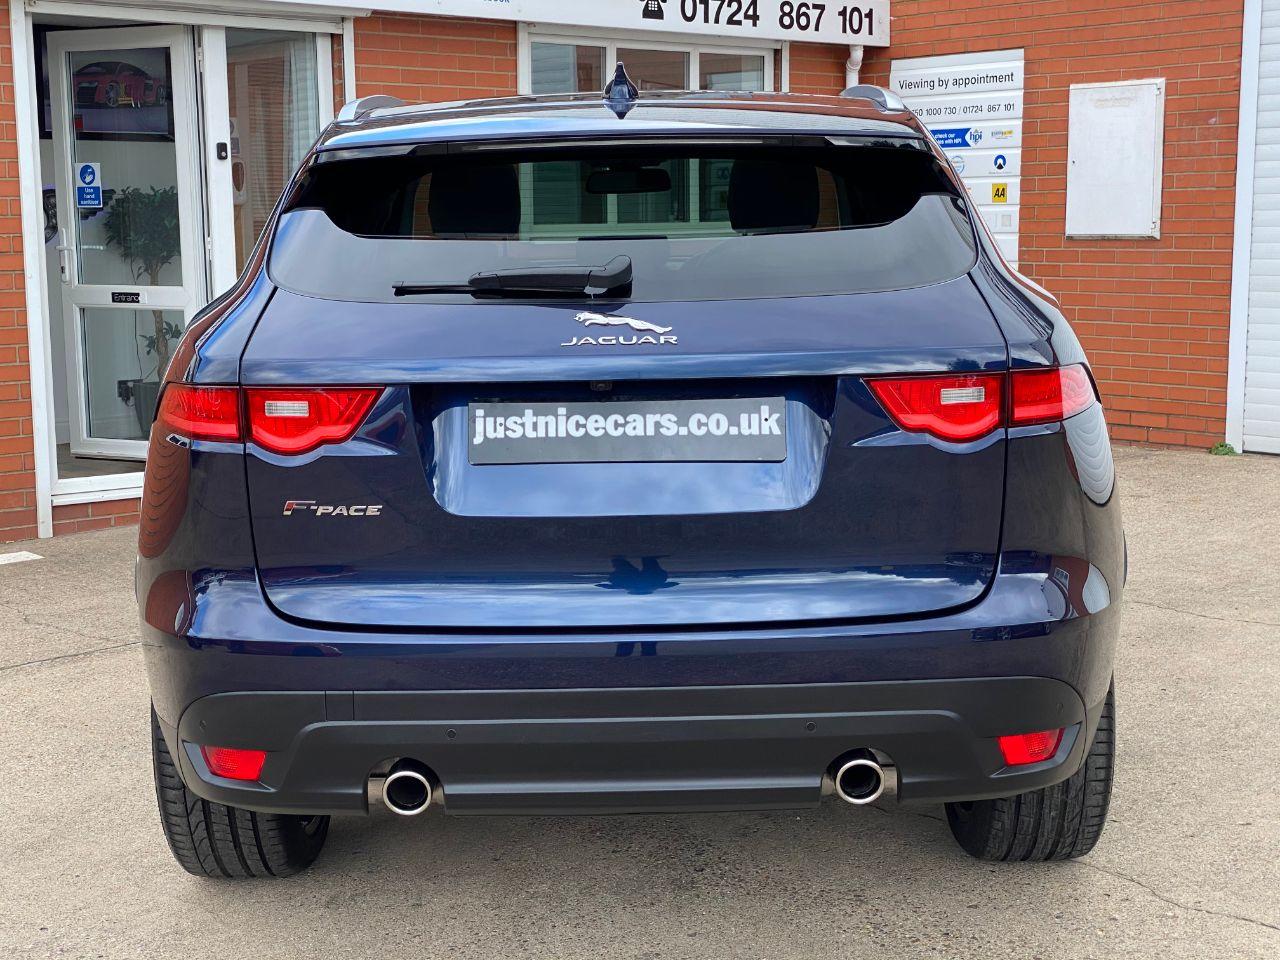 Jaguar F-pace 2.0i Portfolio 5dr AWD Automatic 300BHP Estate Petrol Loire Blue Metallic